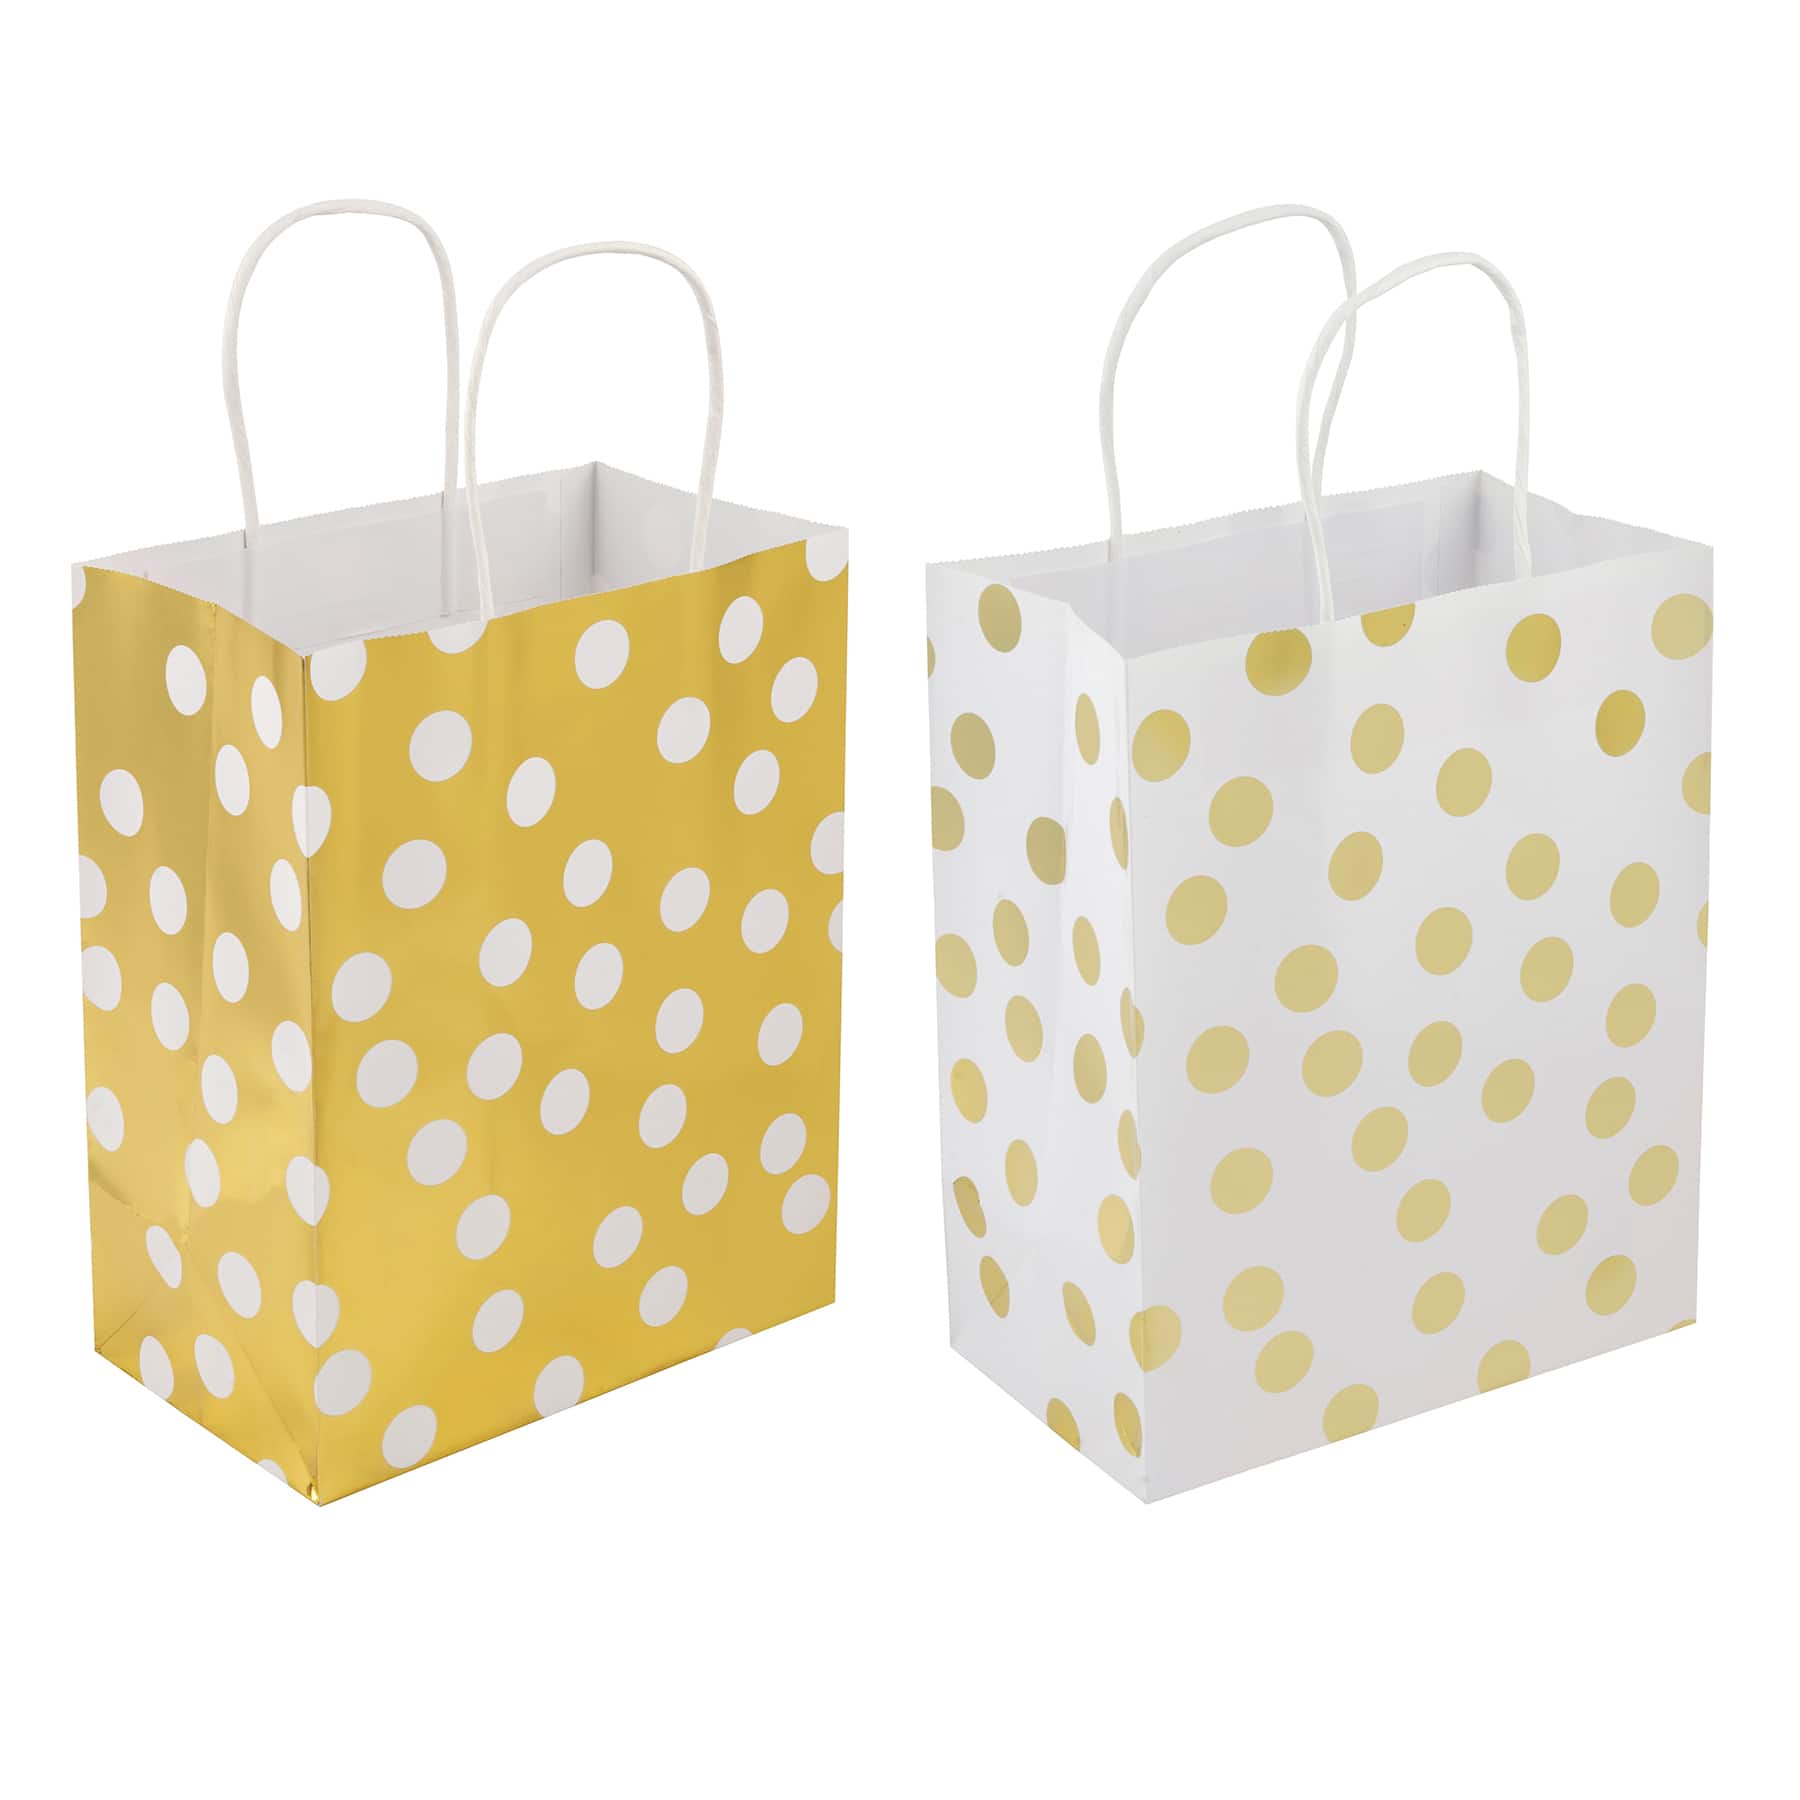 6 Packs: 13 ct. (78 total) Medium Gold &#x26; White Polka Dot Gift Bag Value Pack by Celebrate It&#x2122;